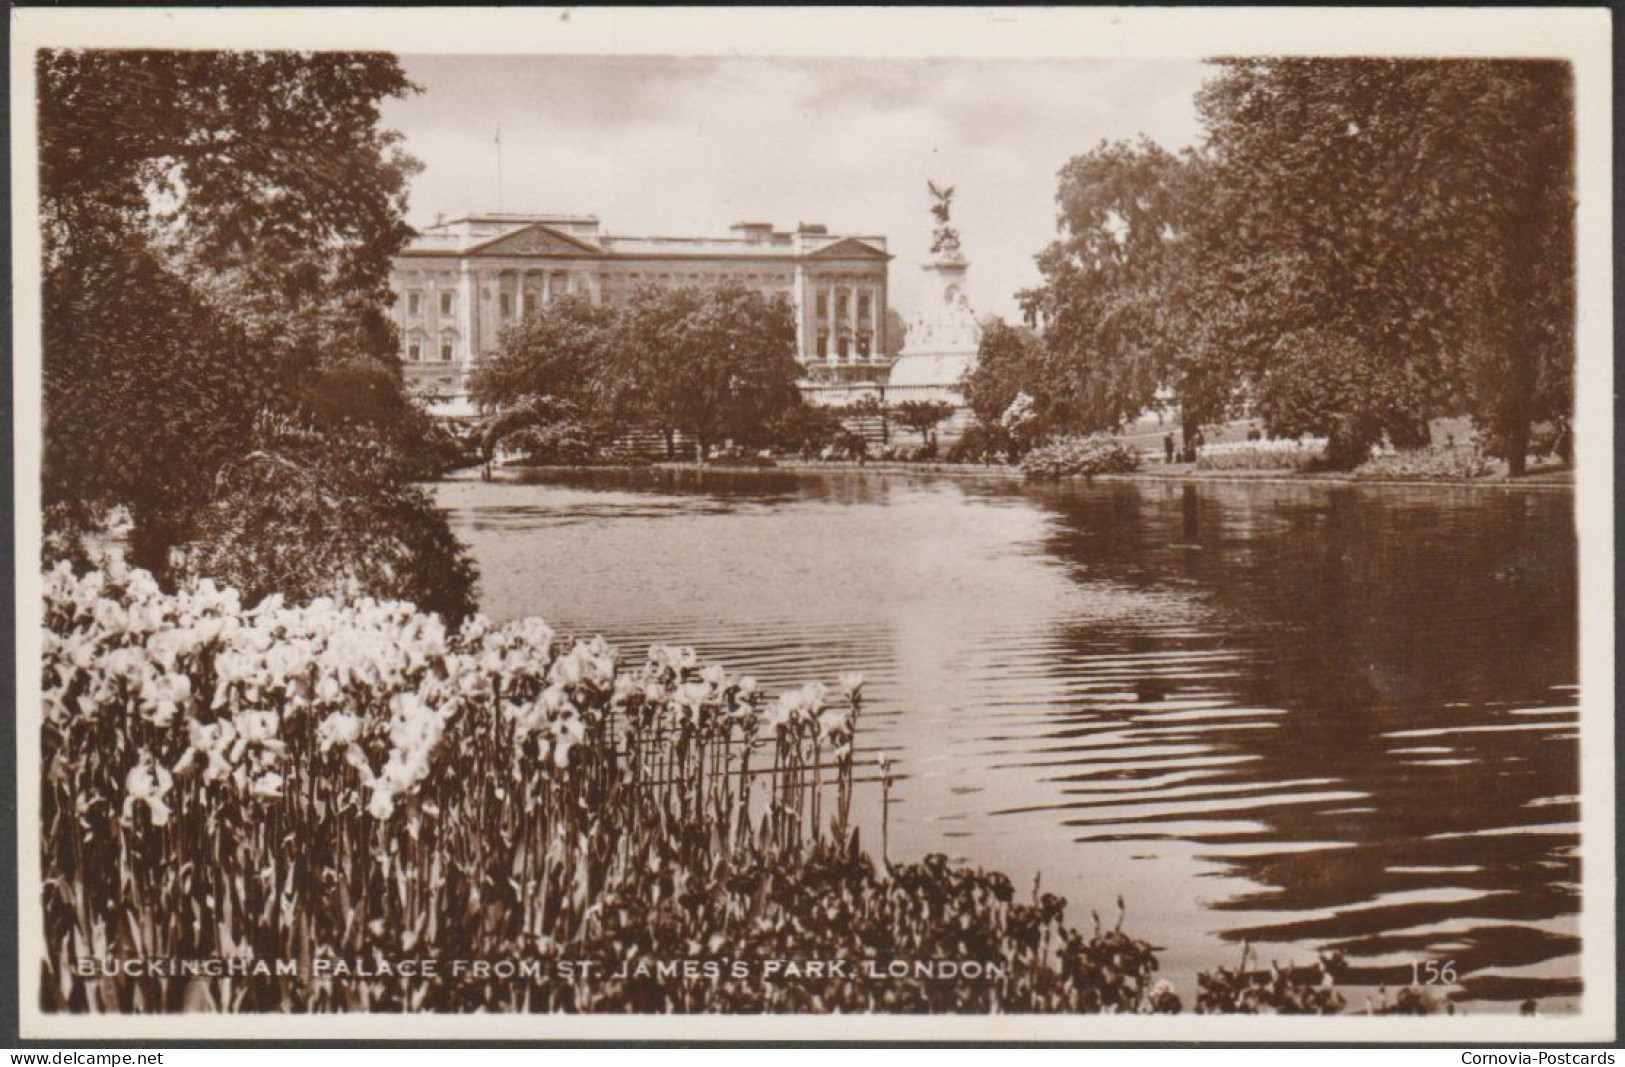 Buckingham Palace From St James's Park, London, 1939 - Excel Series RP Postcard - Buckingham Palace